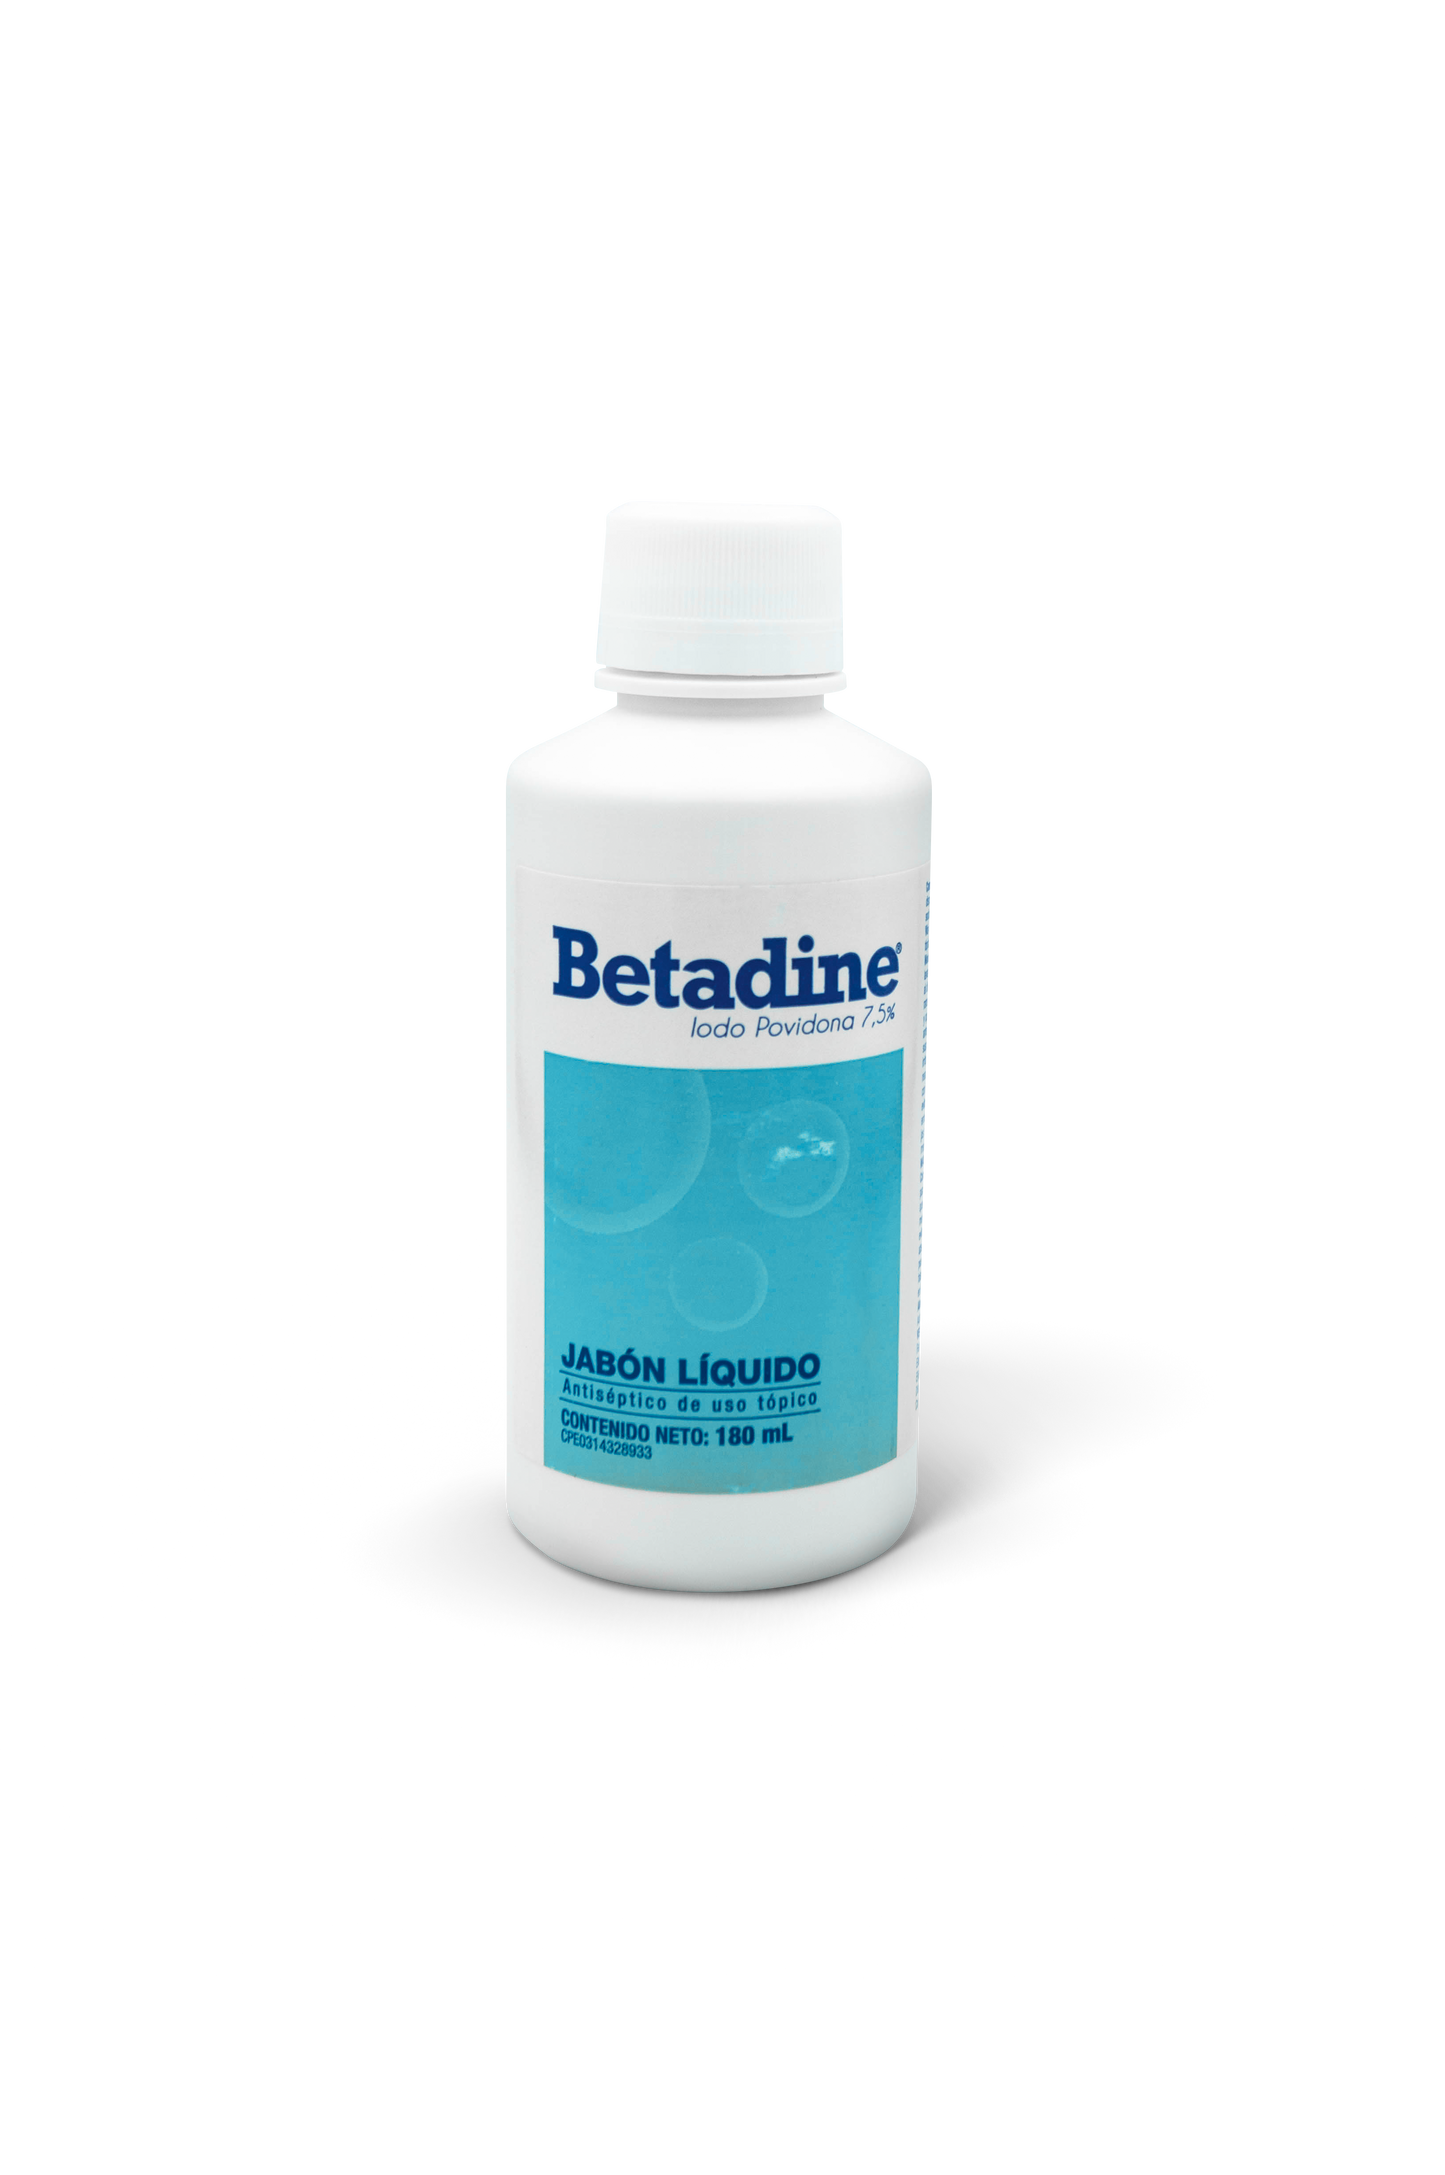 Betadine 7,5% jabón liquido 180mL